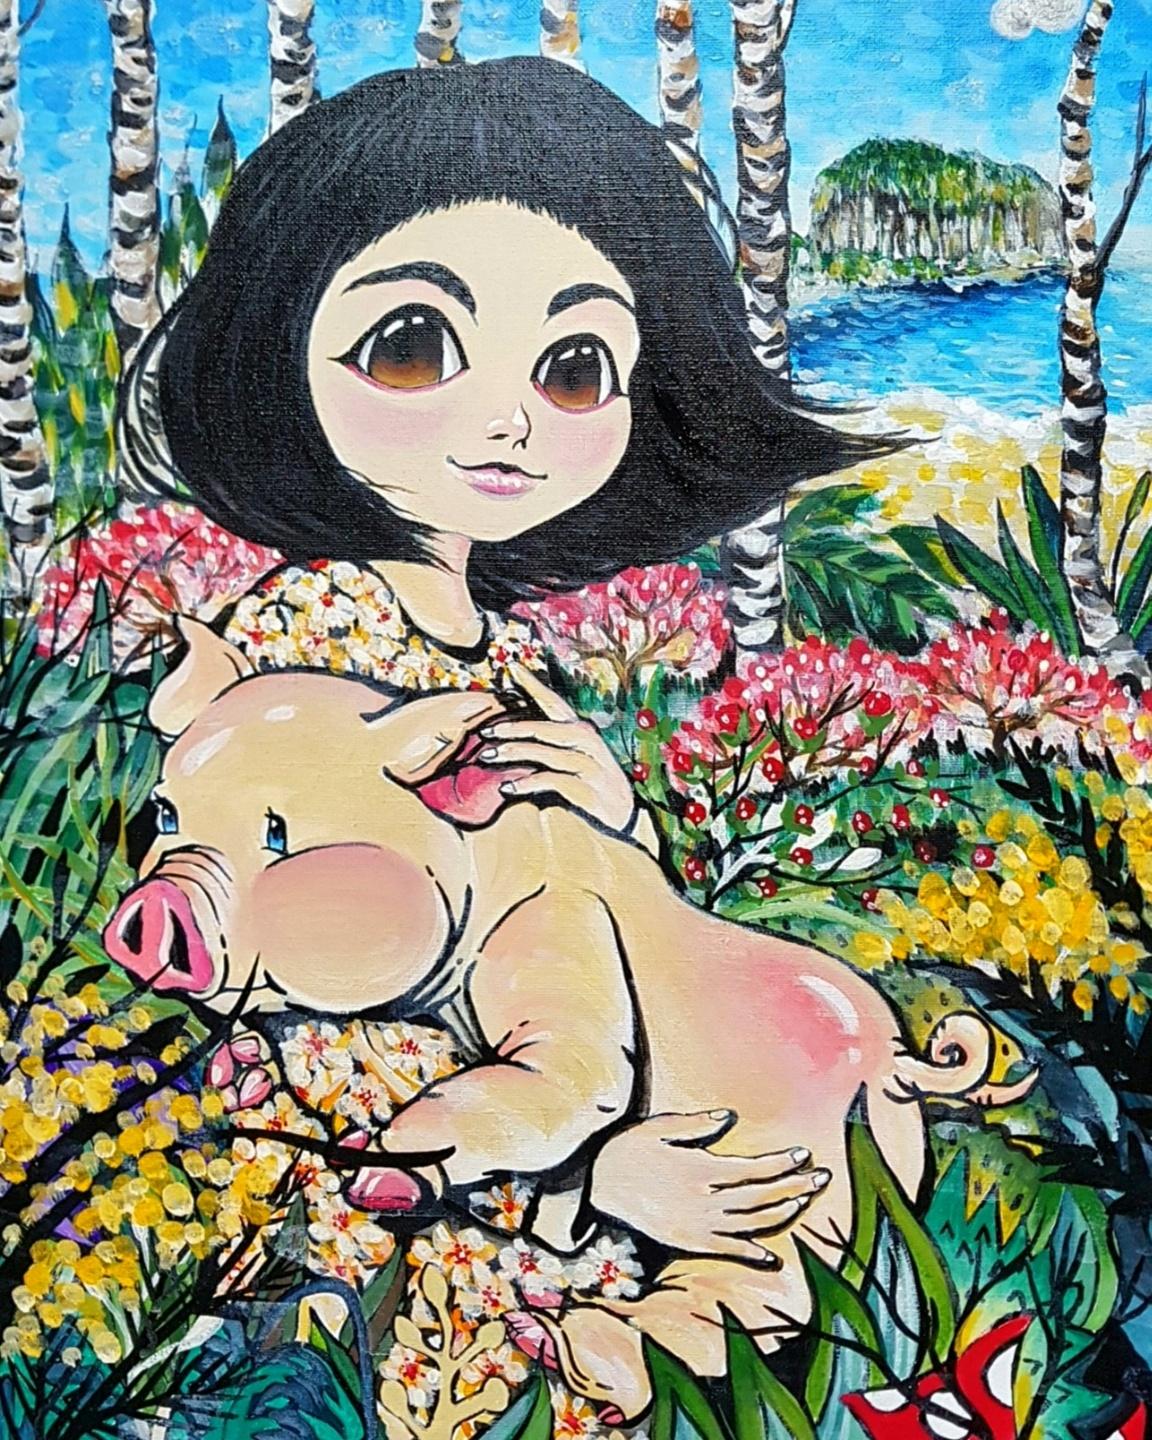 Shin Seung-Hun Figurative Painting - Korean Contemporary Art - Fantasy Jejuisland - Island Girl Story